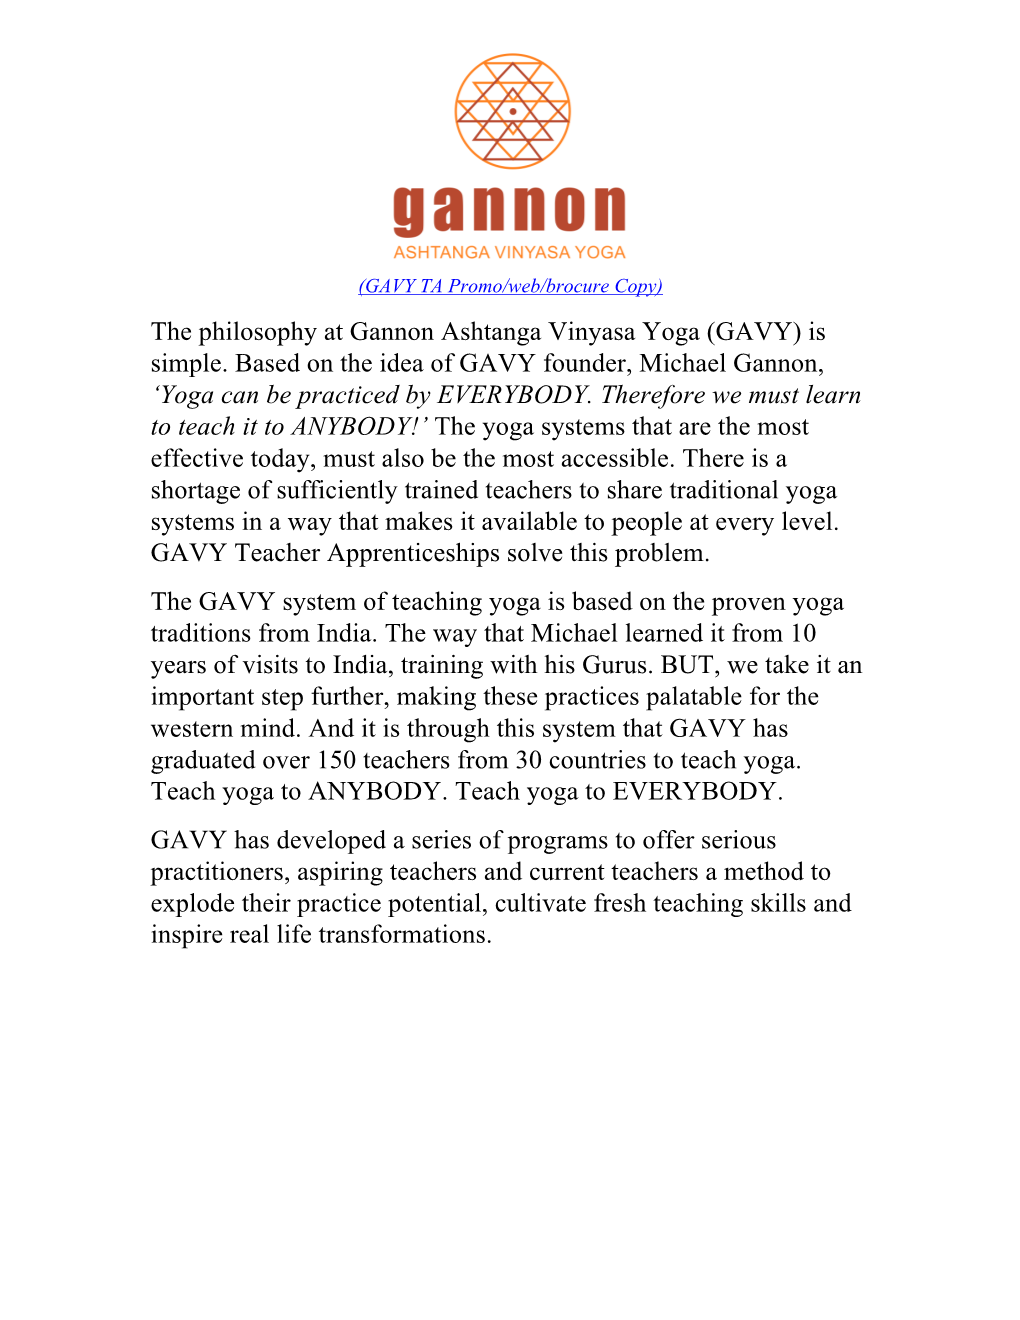 The Philosophy at Gannon Ashtanga Vinyasa Yoga (GAVY) Is Simple